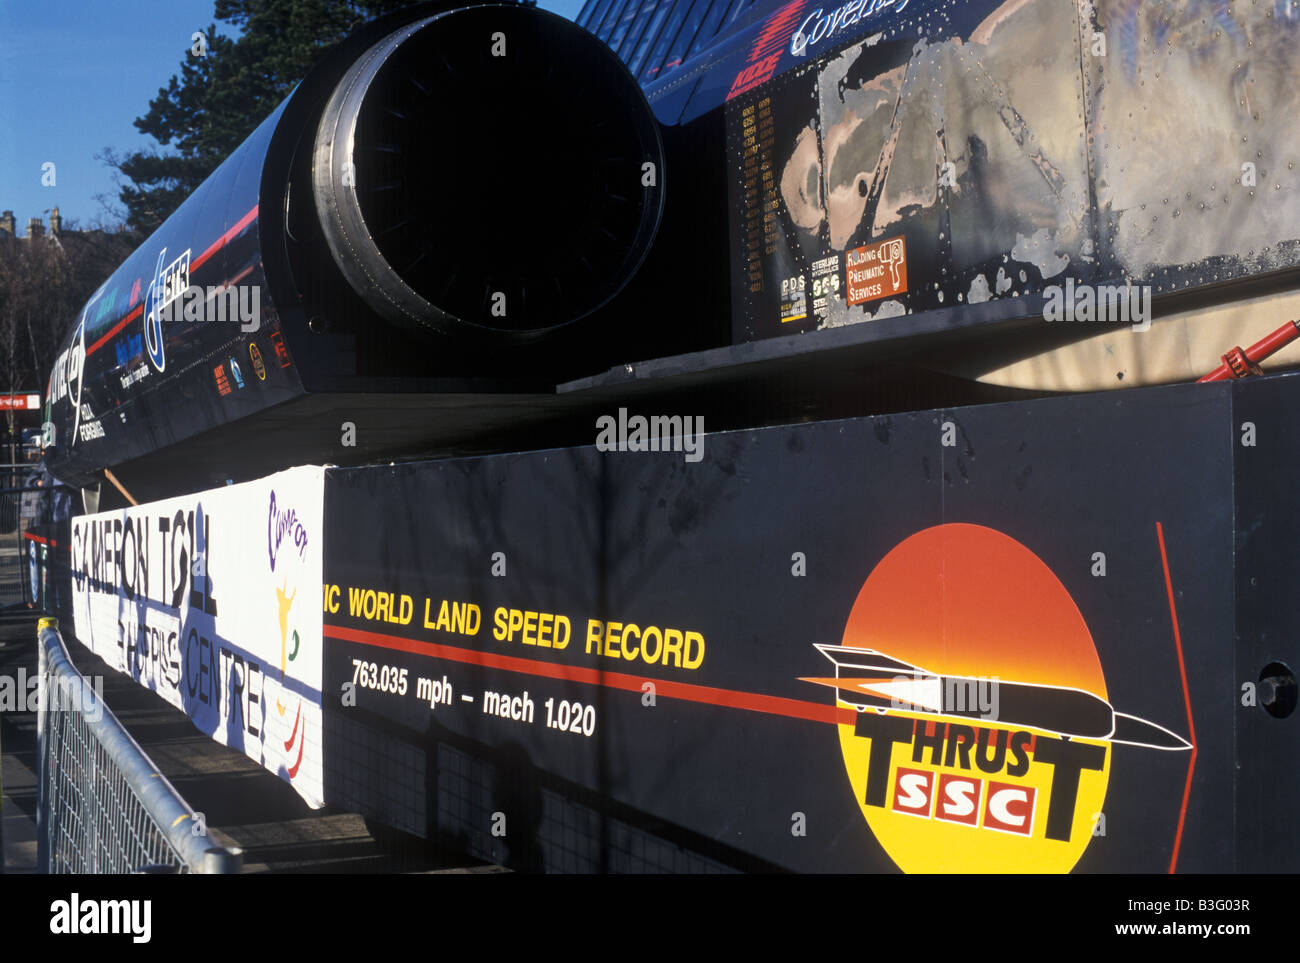 Thrust SSC world land speed record 763.035 mph mach 1.02 Stock Photo